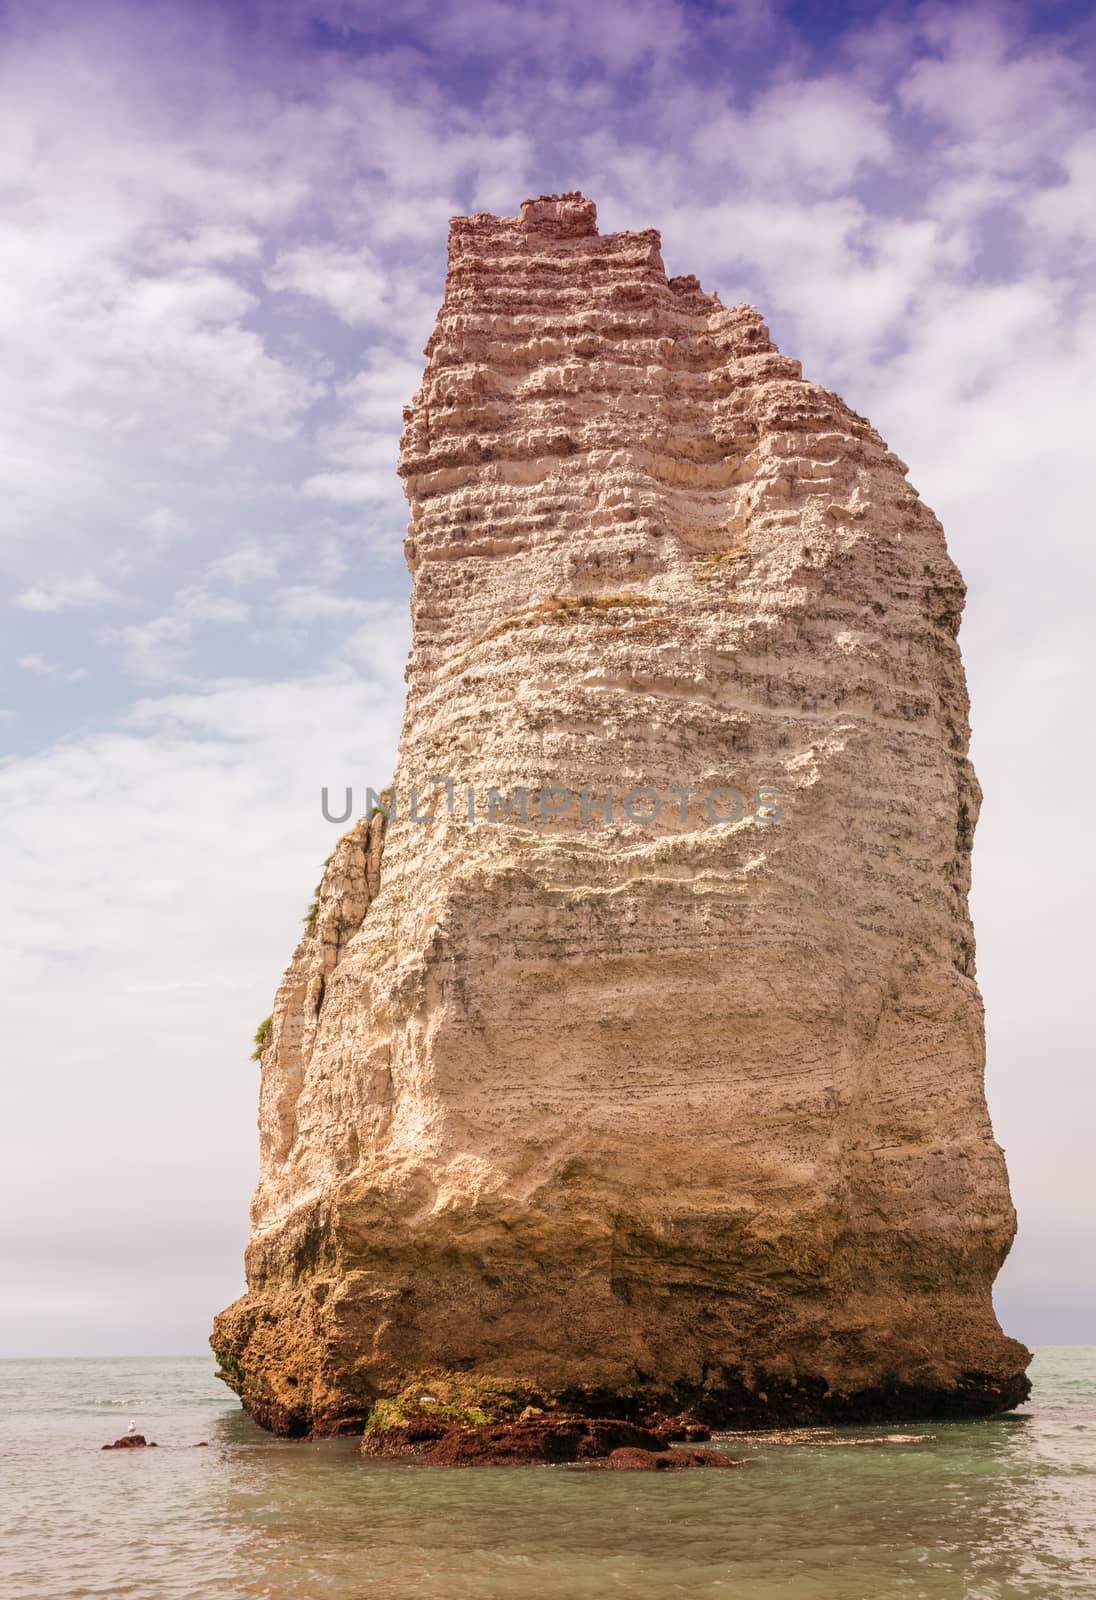 Chalk cliffs at Cote d'Albatre. Etretat, France by jovannig